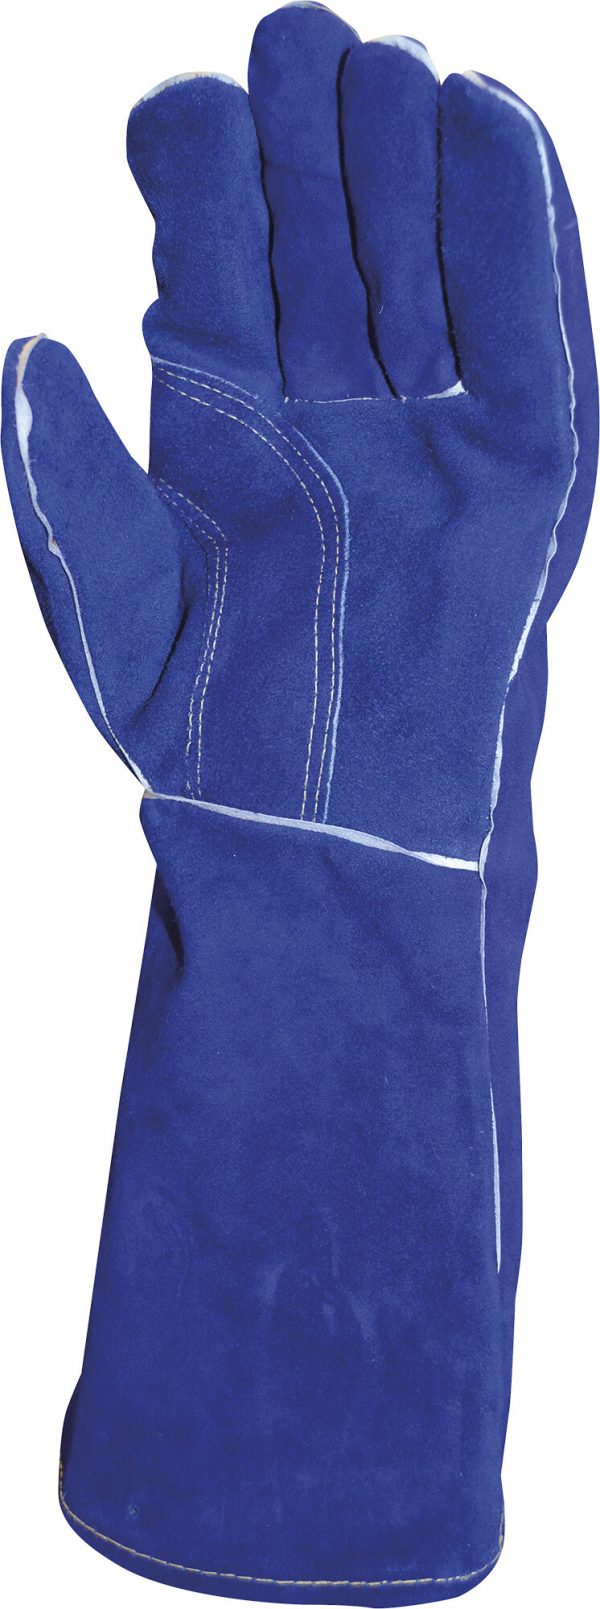 GWB163a ‘Blue Flame’ Premium Kevlar Welder’s Glove